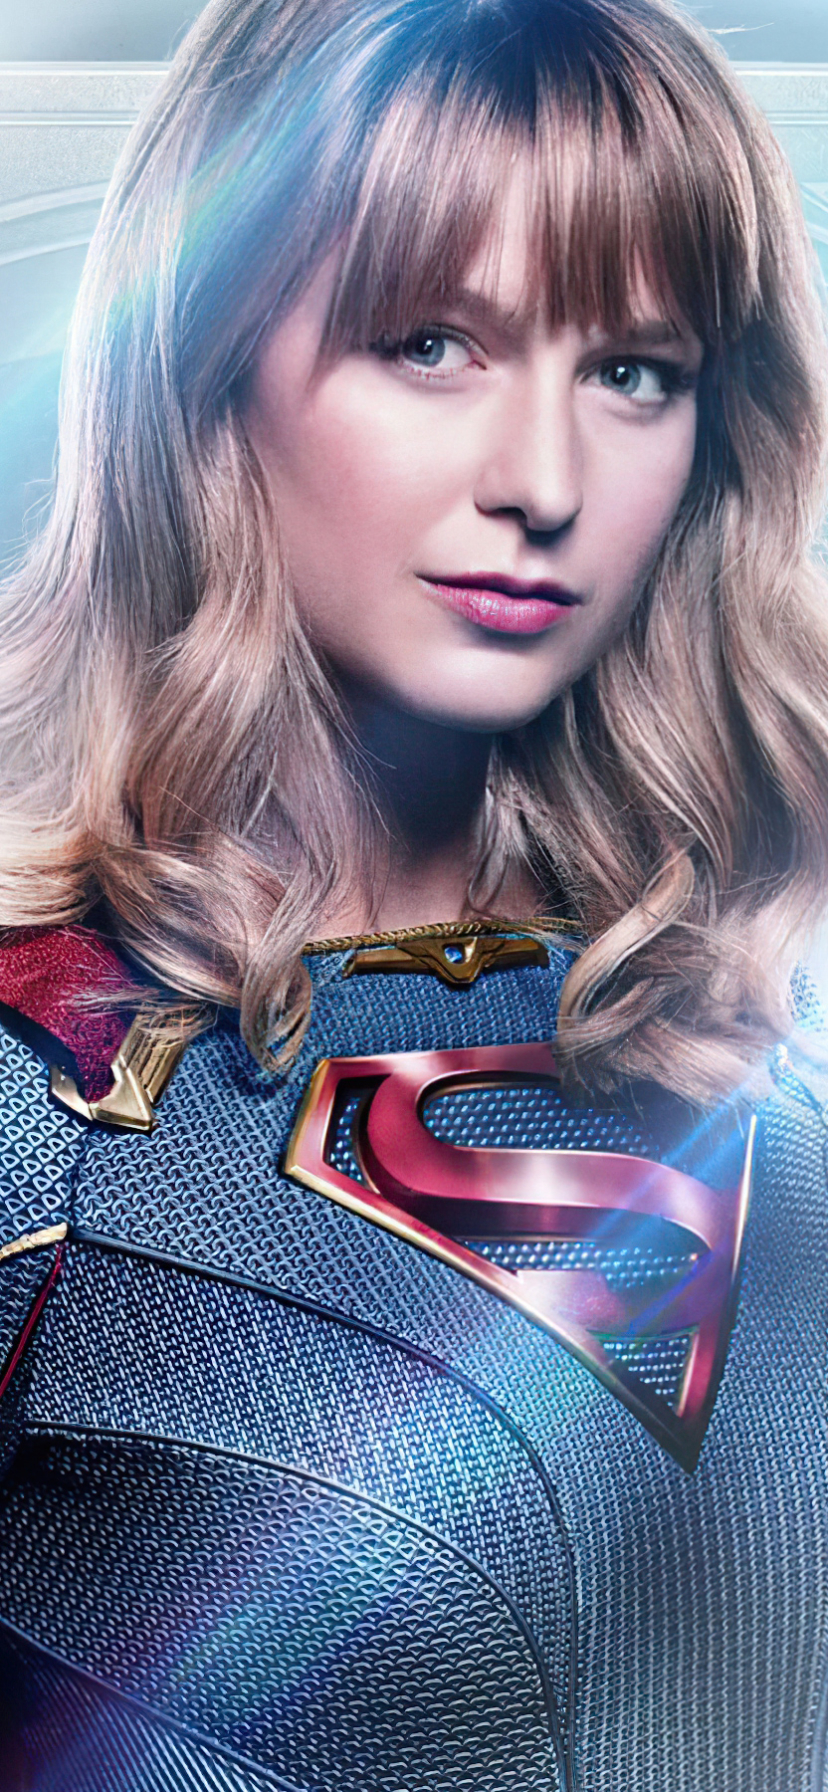 Descarga gratuita de fondo de pantalla para móvil de Superhombre, Series De Televisión, Supergirl, Melissa Benoist, Superchica (Programa De Televisión), Kara Danvers.